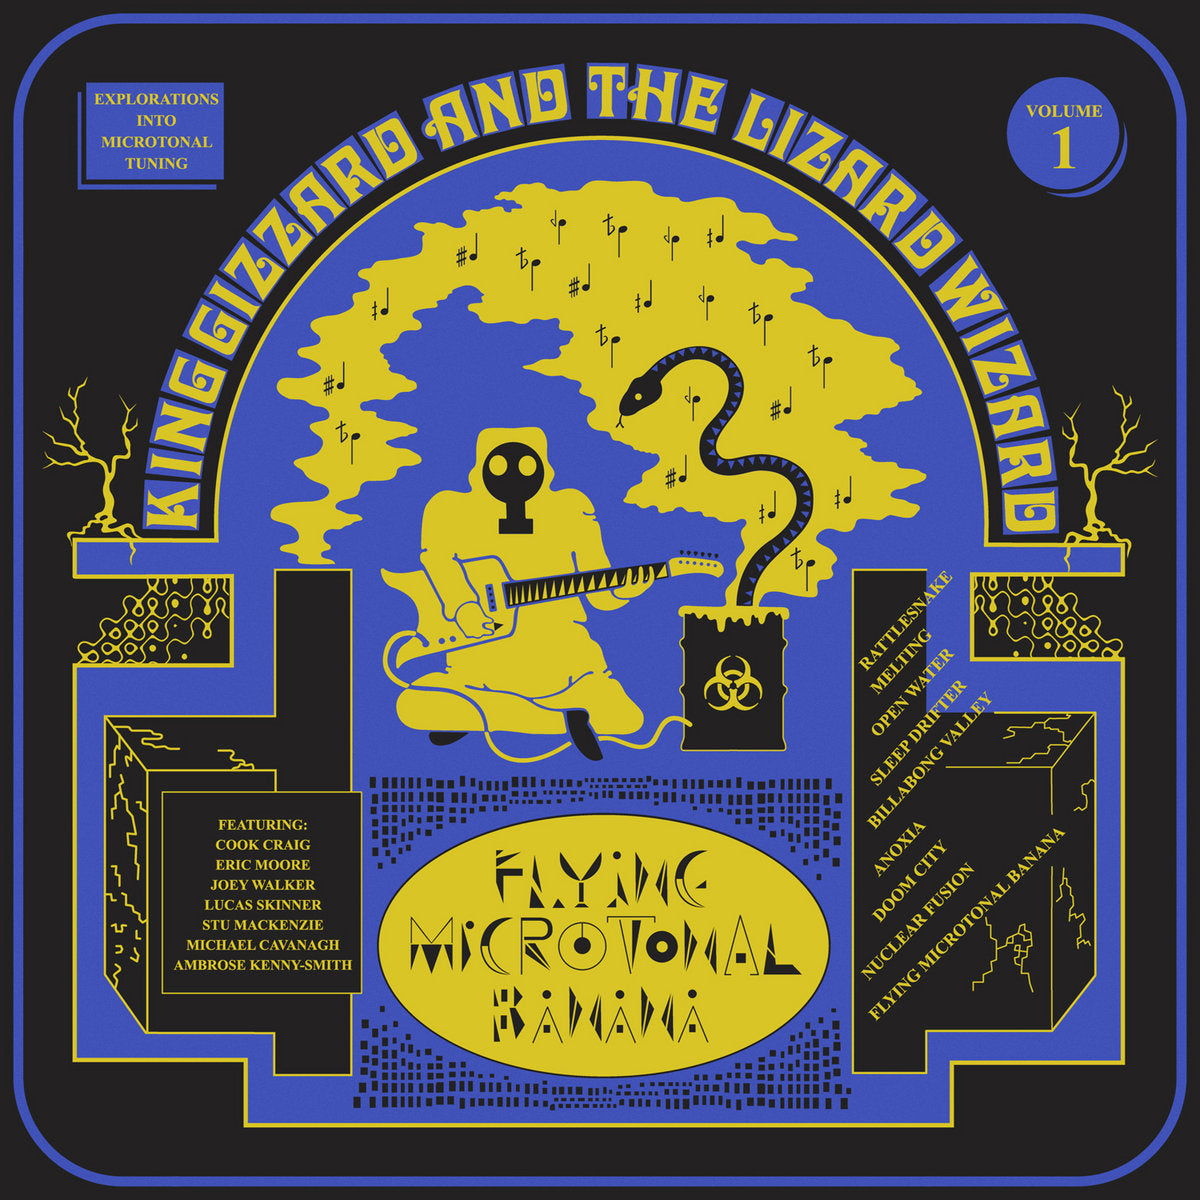 King Gizzard And The Lizard Wizard: Flying Microtonal Banana (Explorations Into Microtonal Tuning Volume 1) (Vinyl LP)